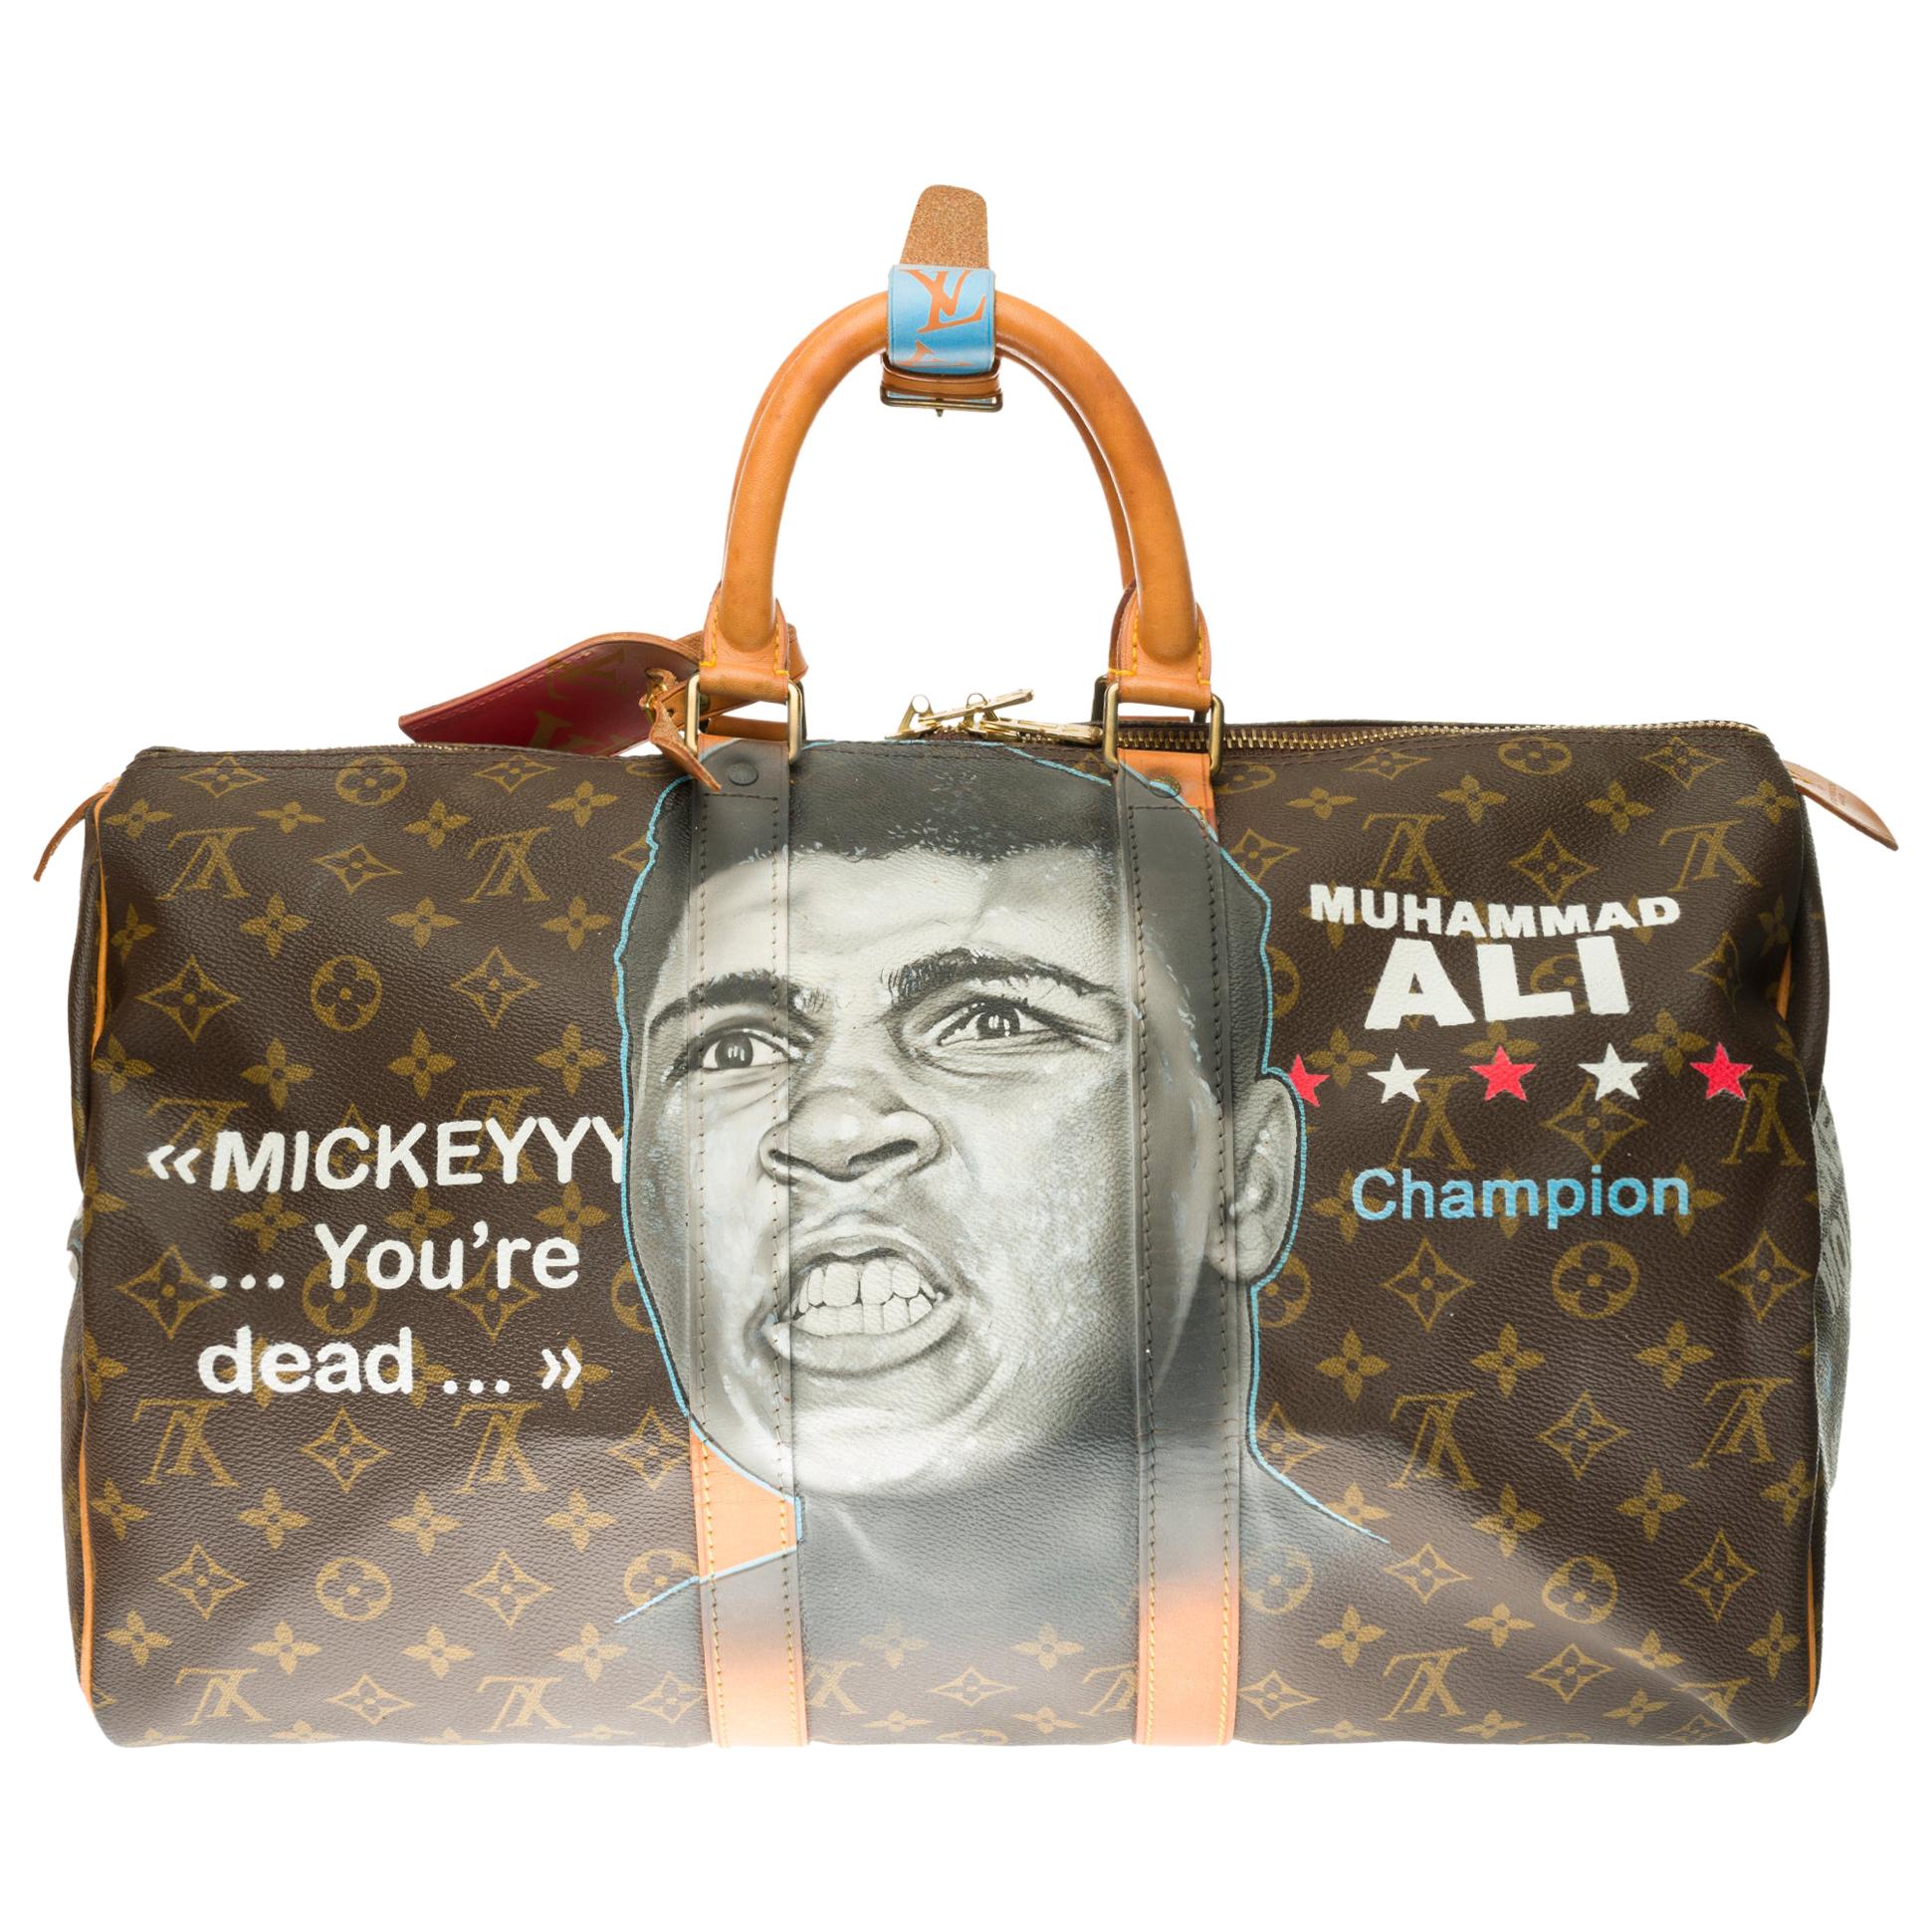 Travel bag Louis Vuitton 45 Monogram customized "Muhammad Ali Vs Mickey"